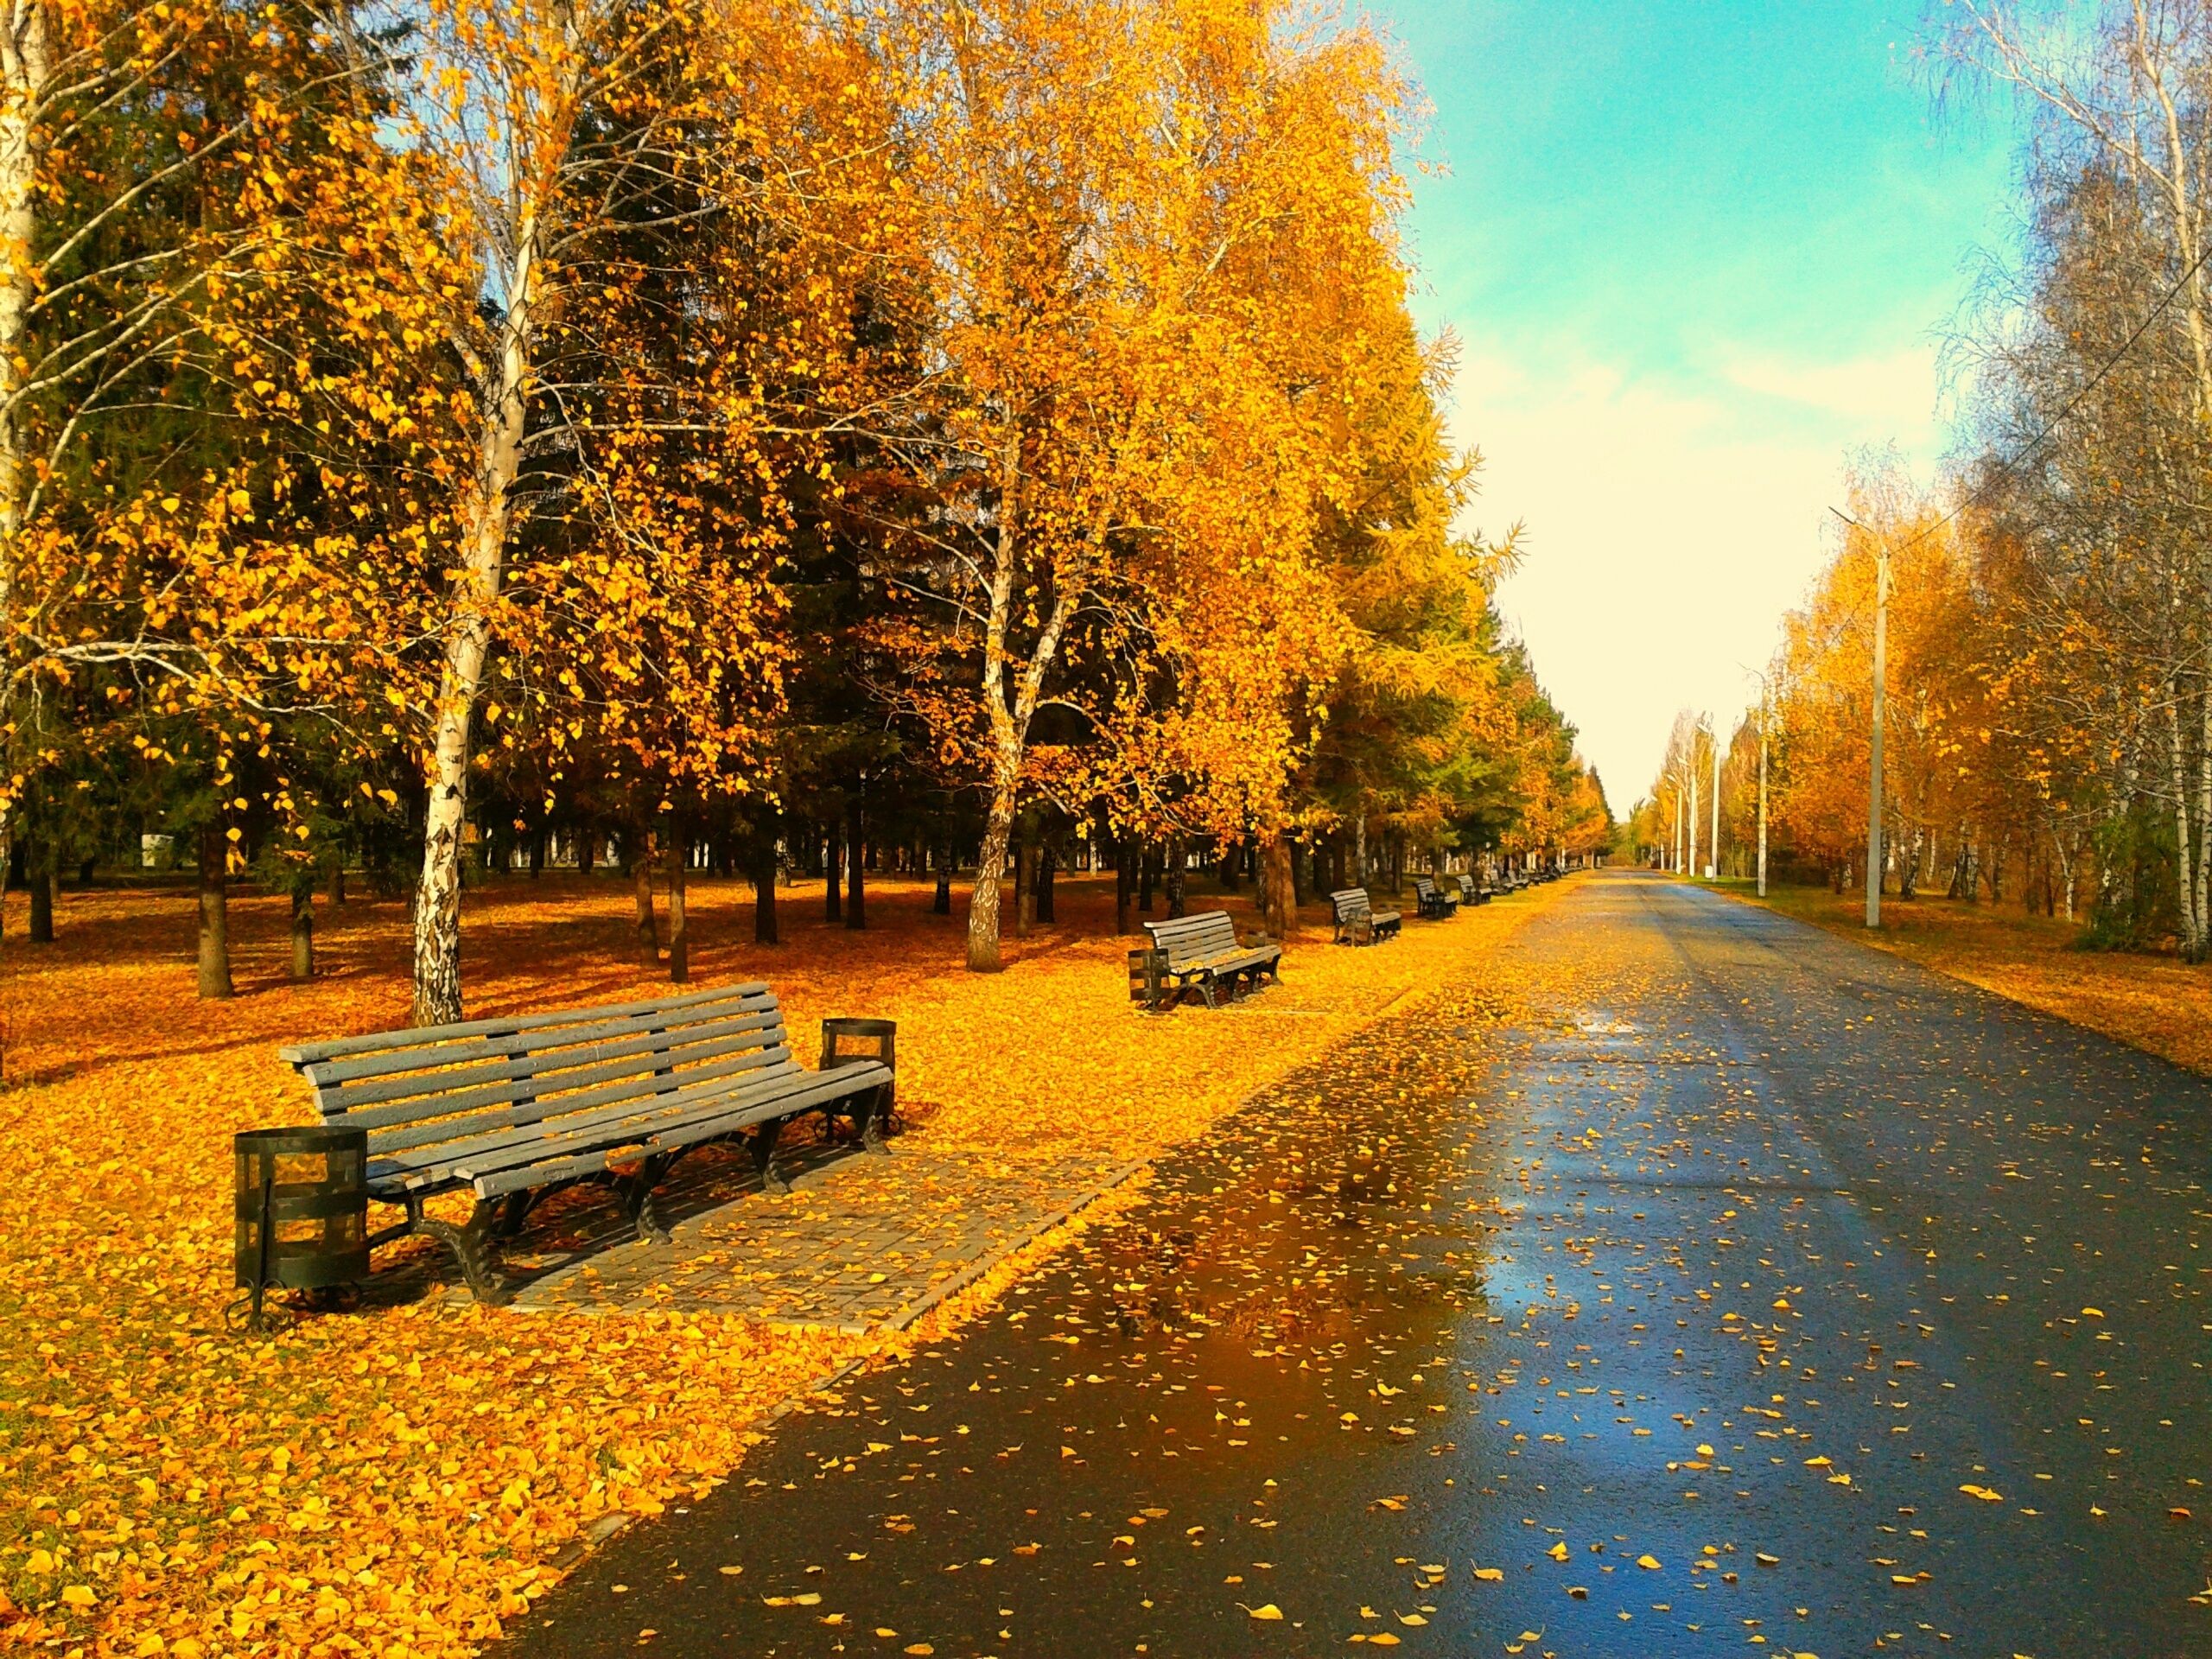 sunshine follows the rain. Autumn wallpaper hd, Scenery wallpaper, Scenery